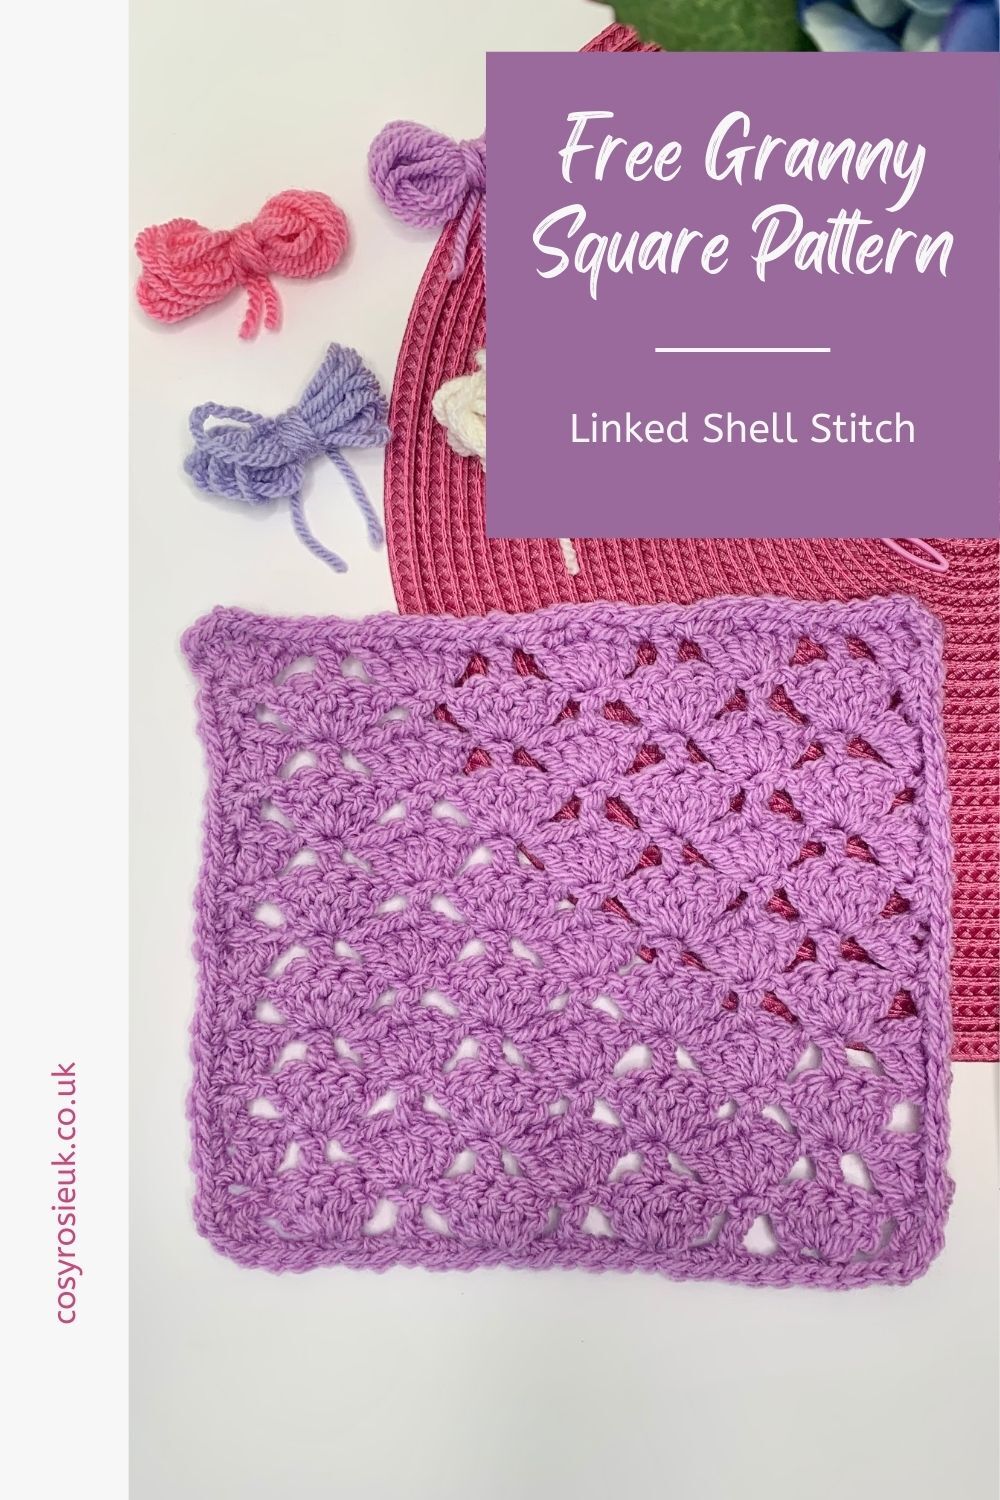 Free Granny Square Pattern linked shell stitch